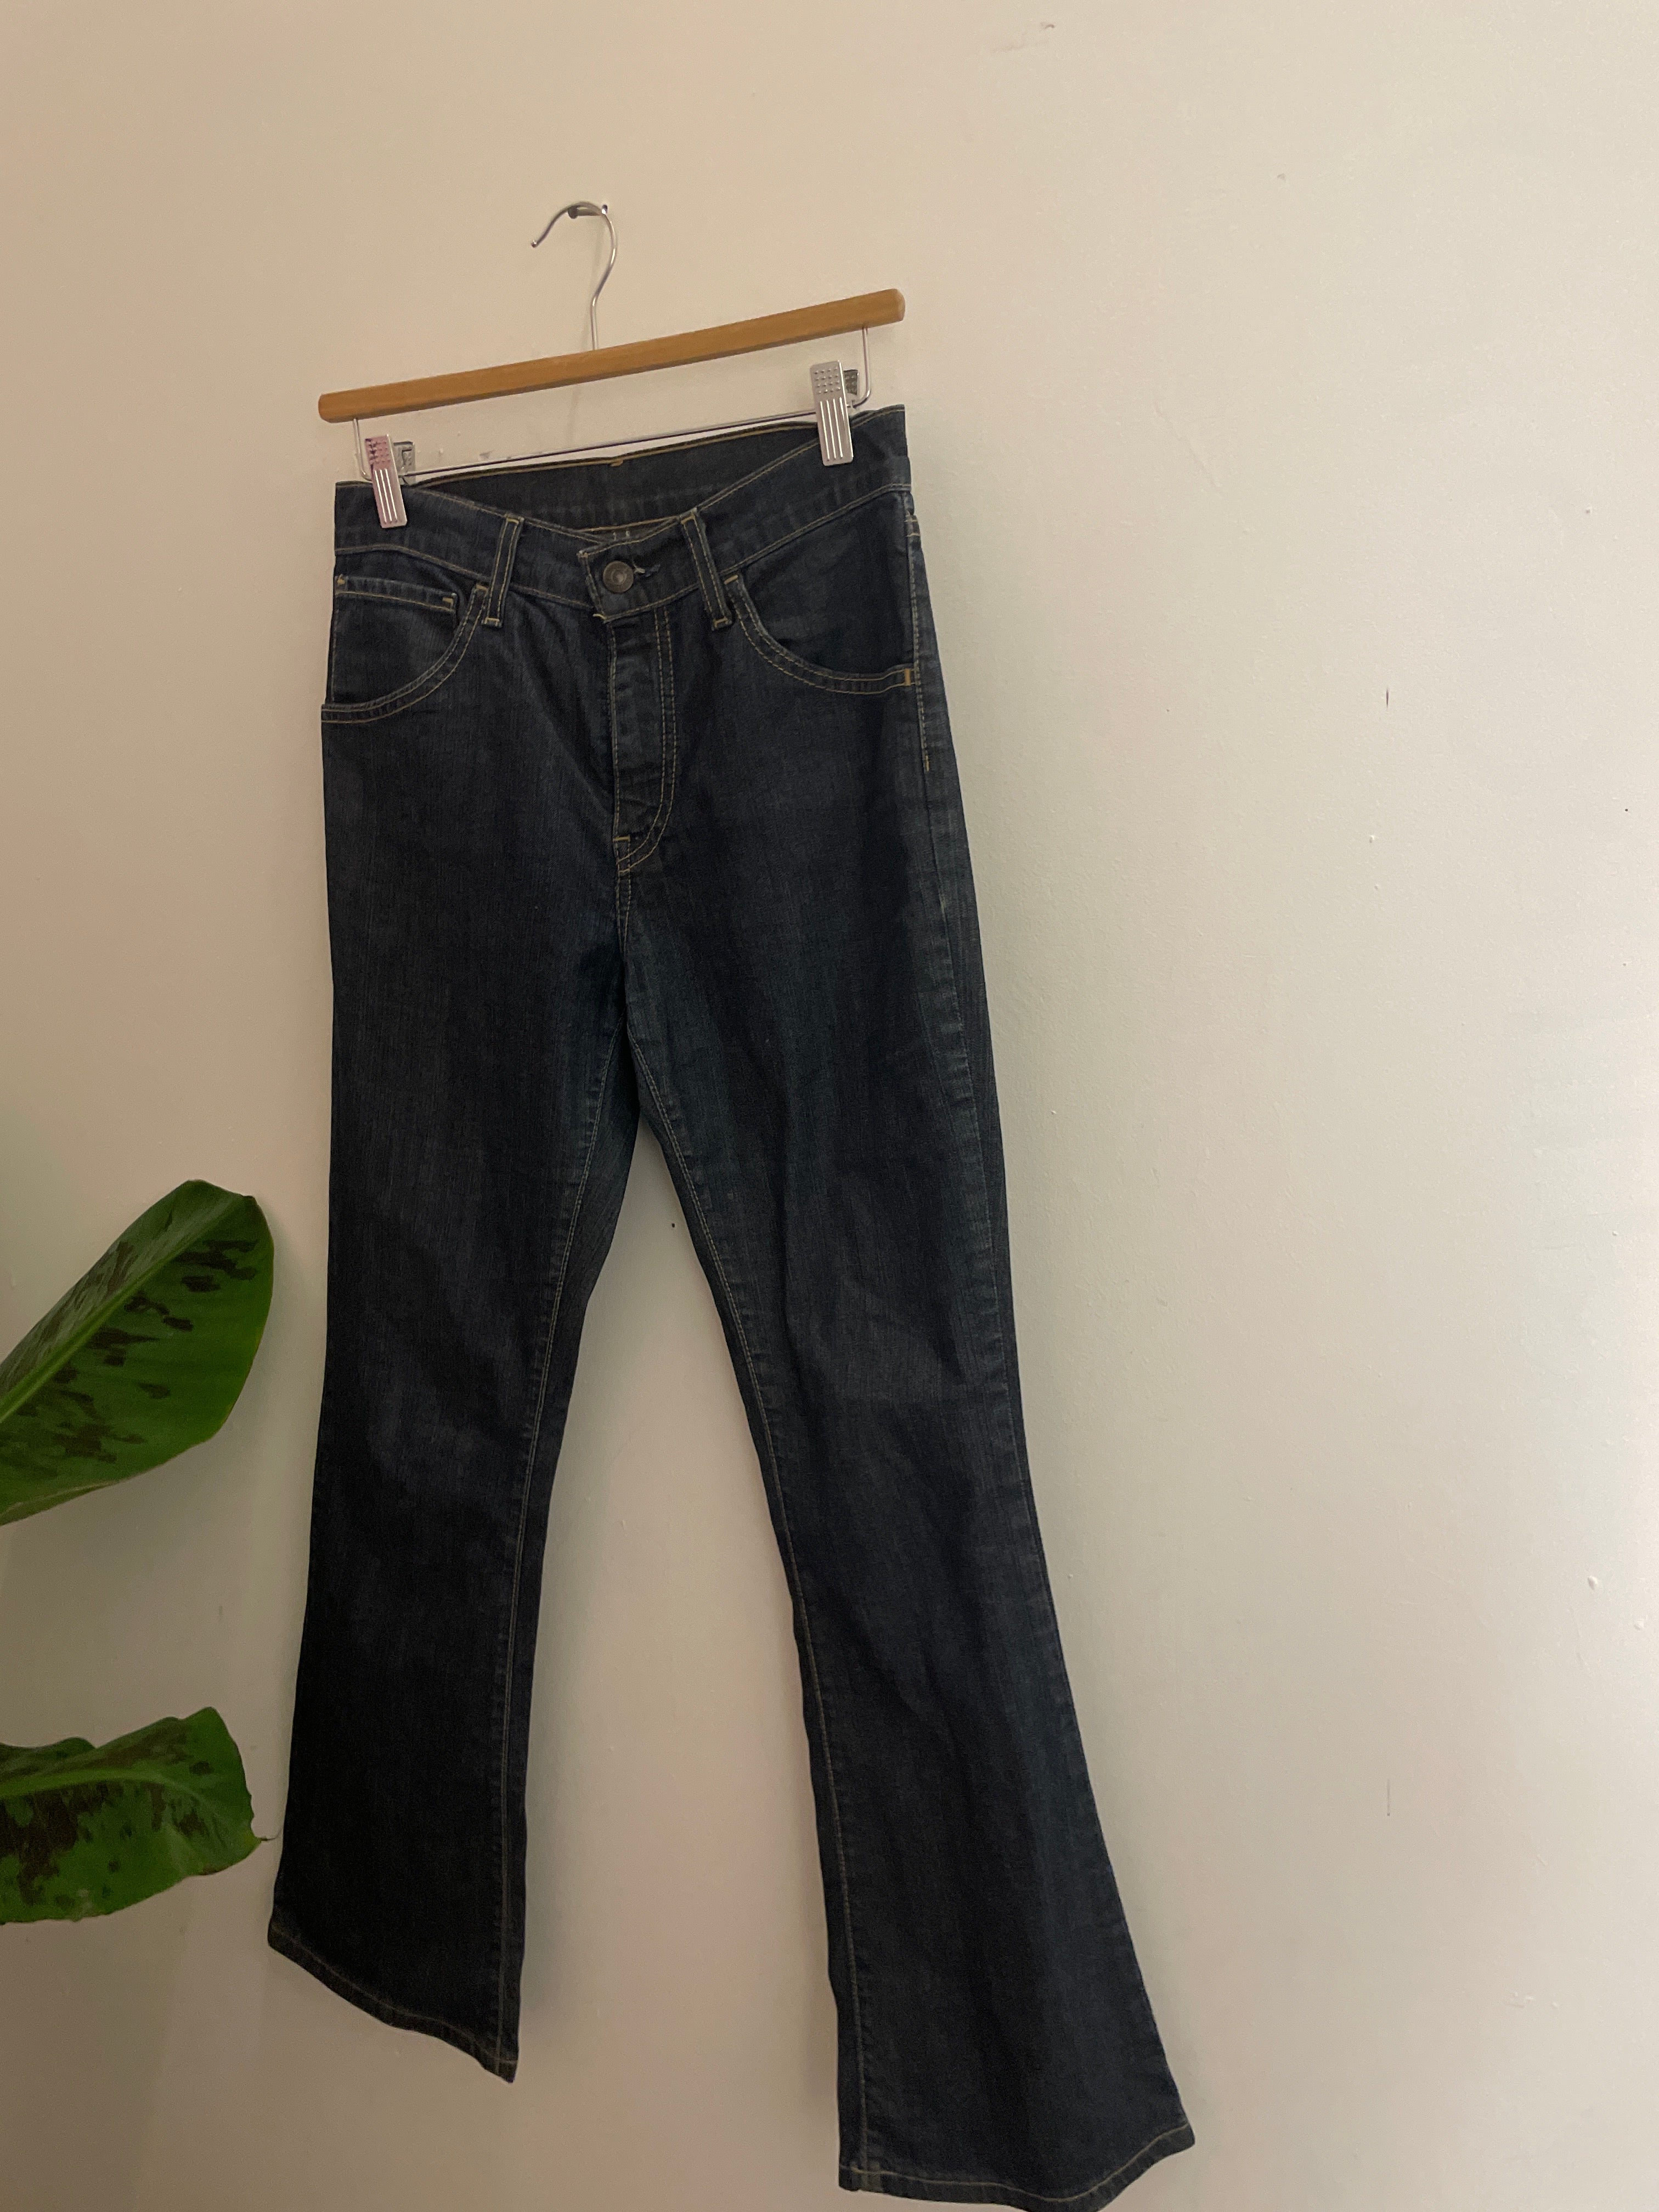 Vintage blue levis strauss & co mens jeans trousers size M